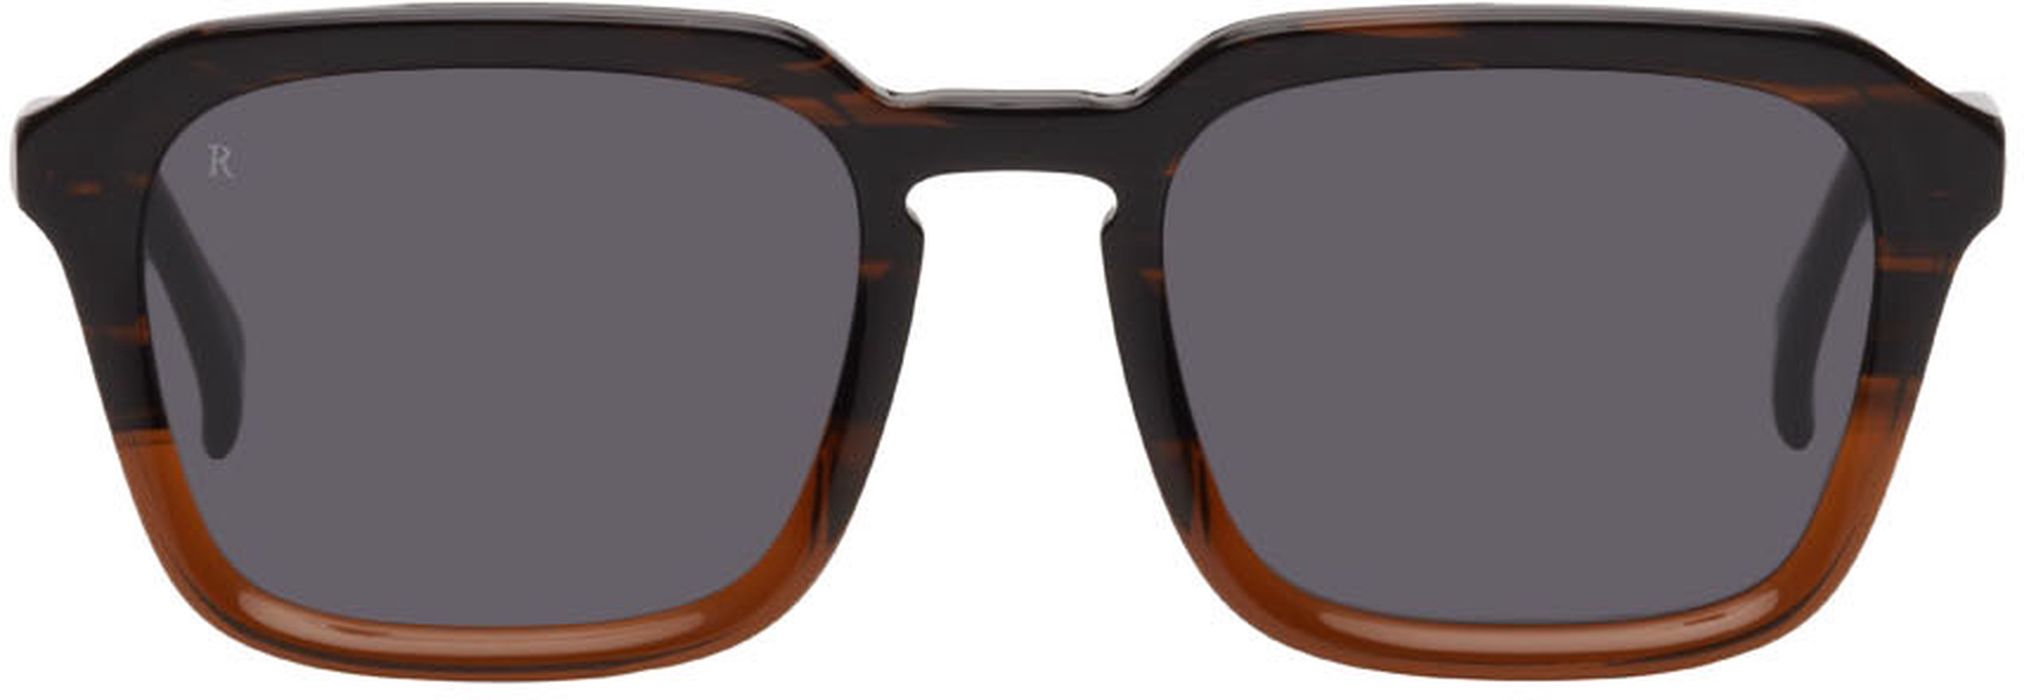 RAEN Tortoiseshell Burel Sunglasses